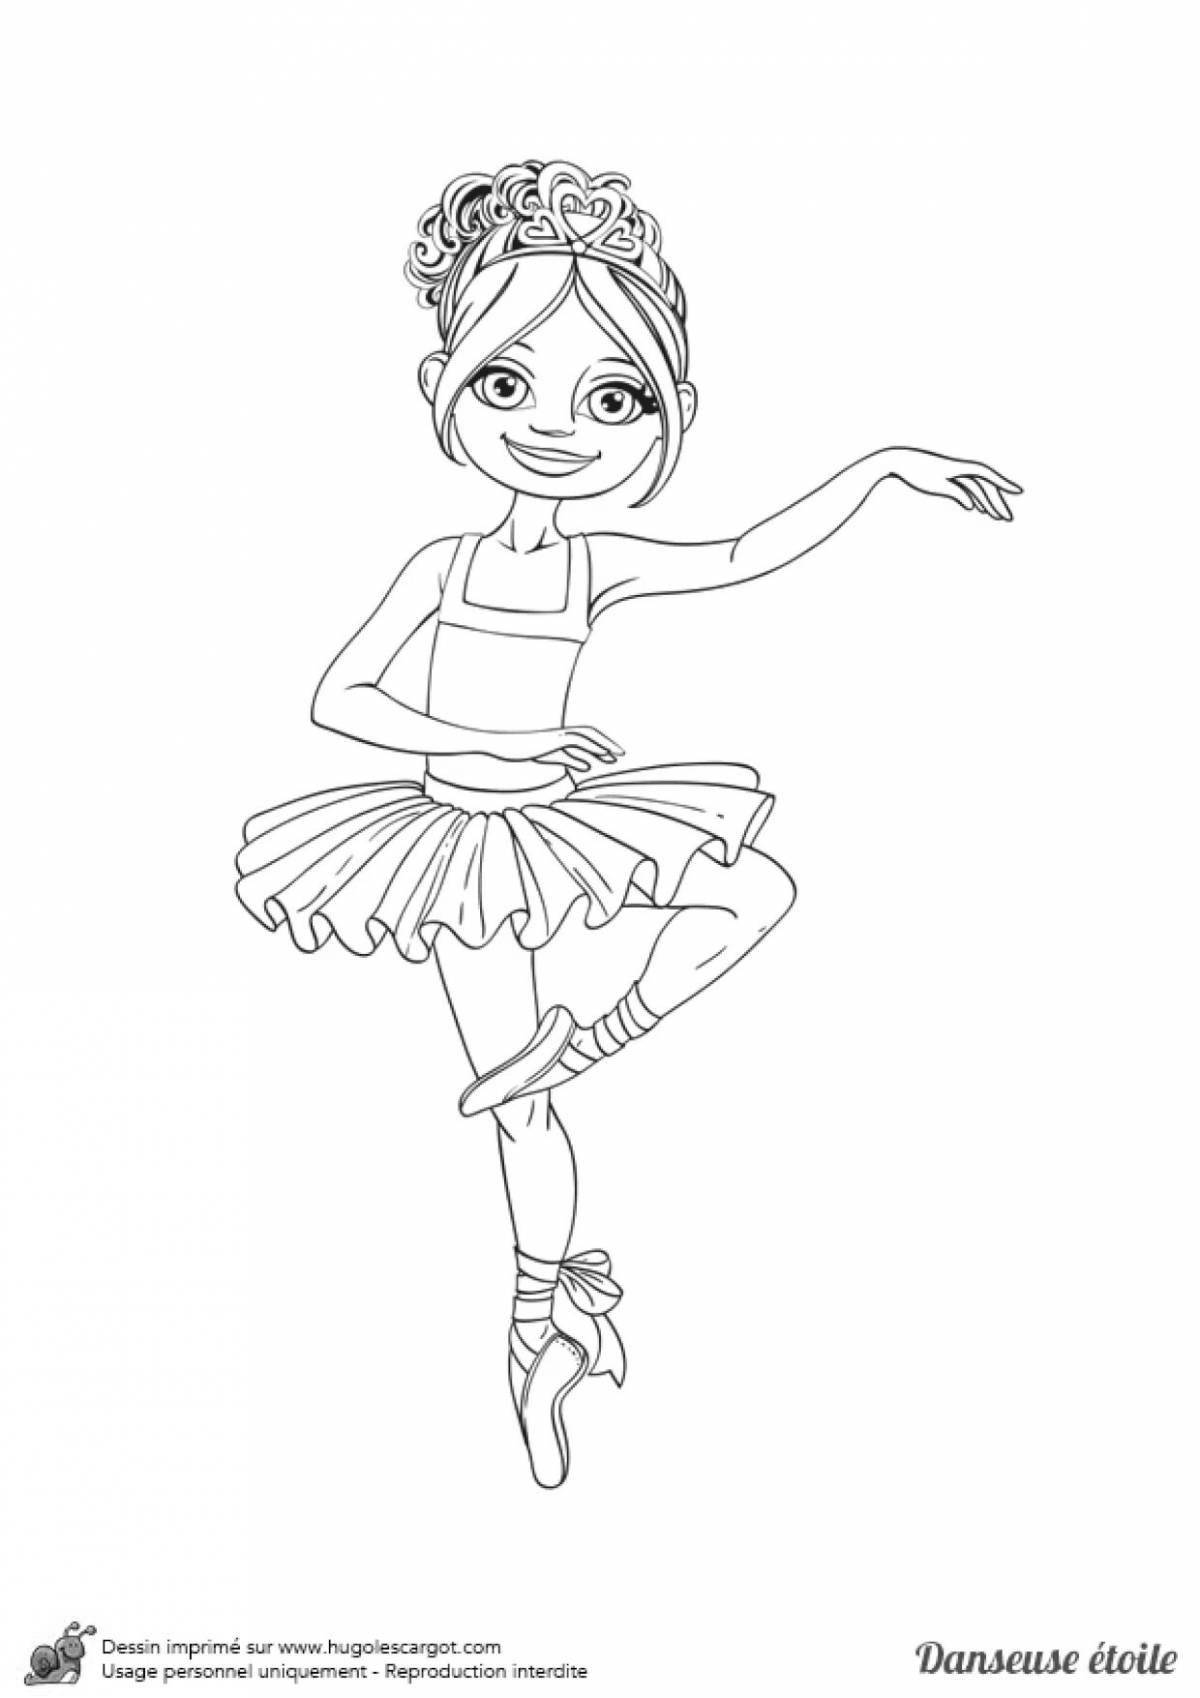 Coloring page joyful dancing girl